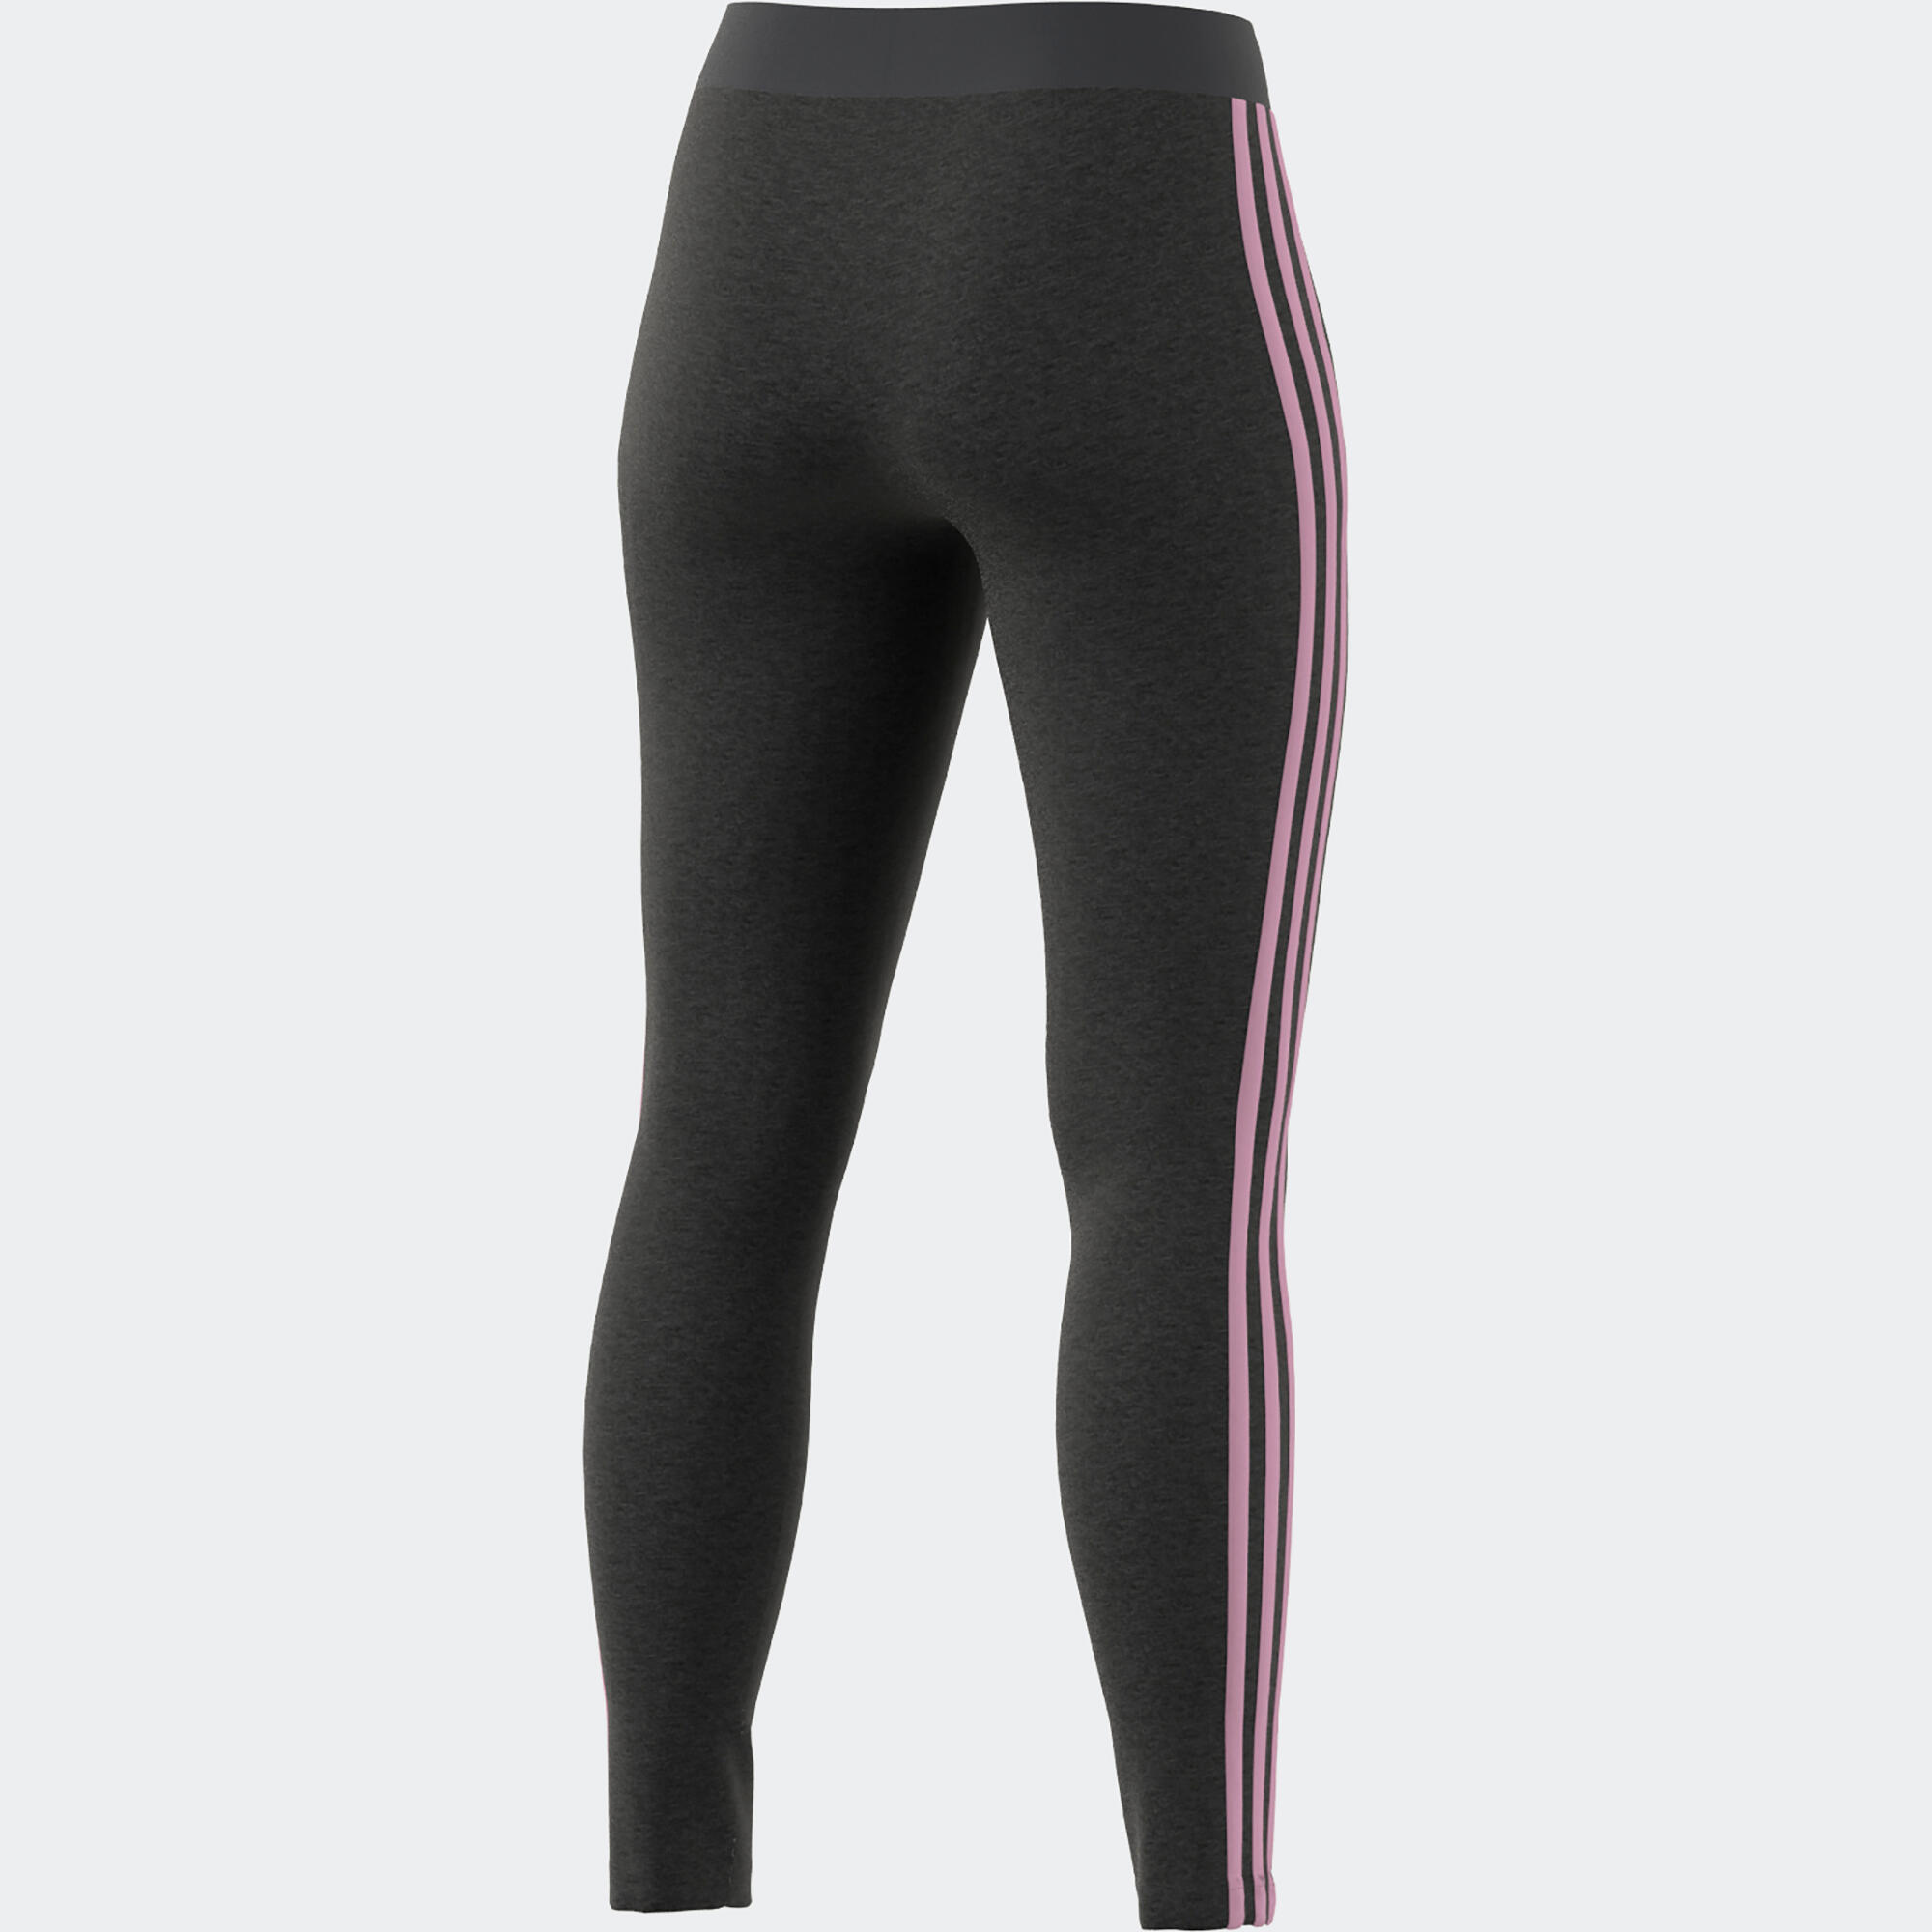 Women's Low-Impact Fitness Leggings - Grey/Pink 3/3